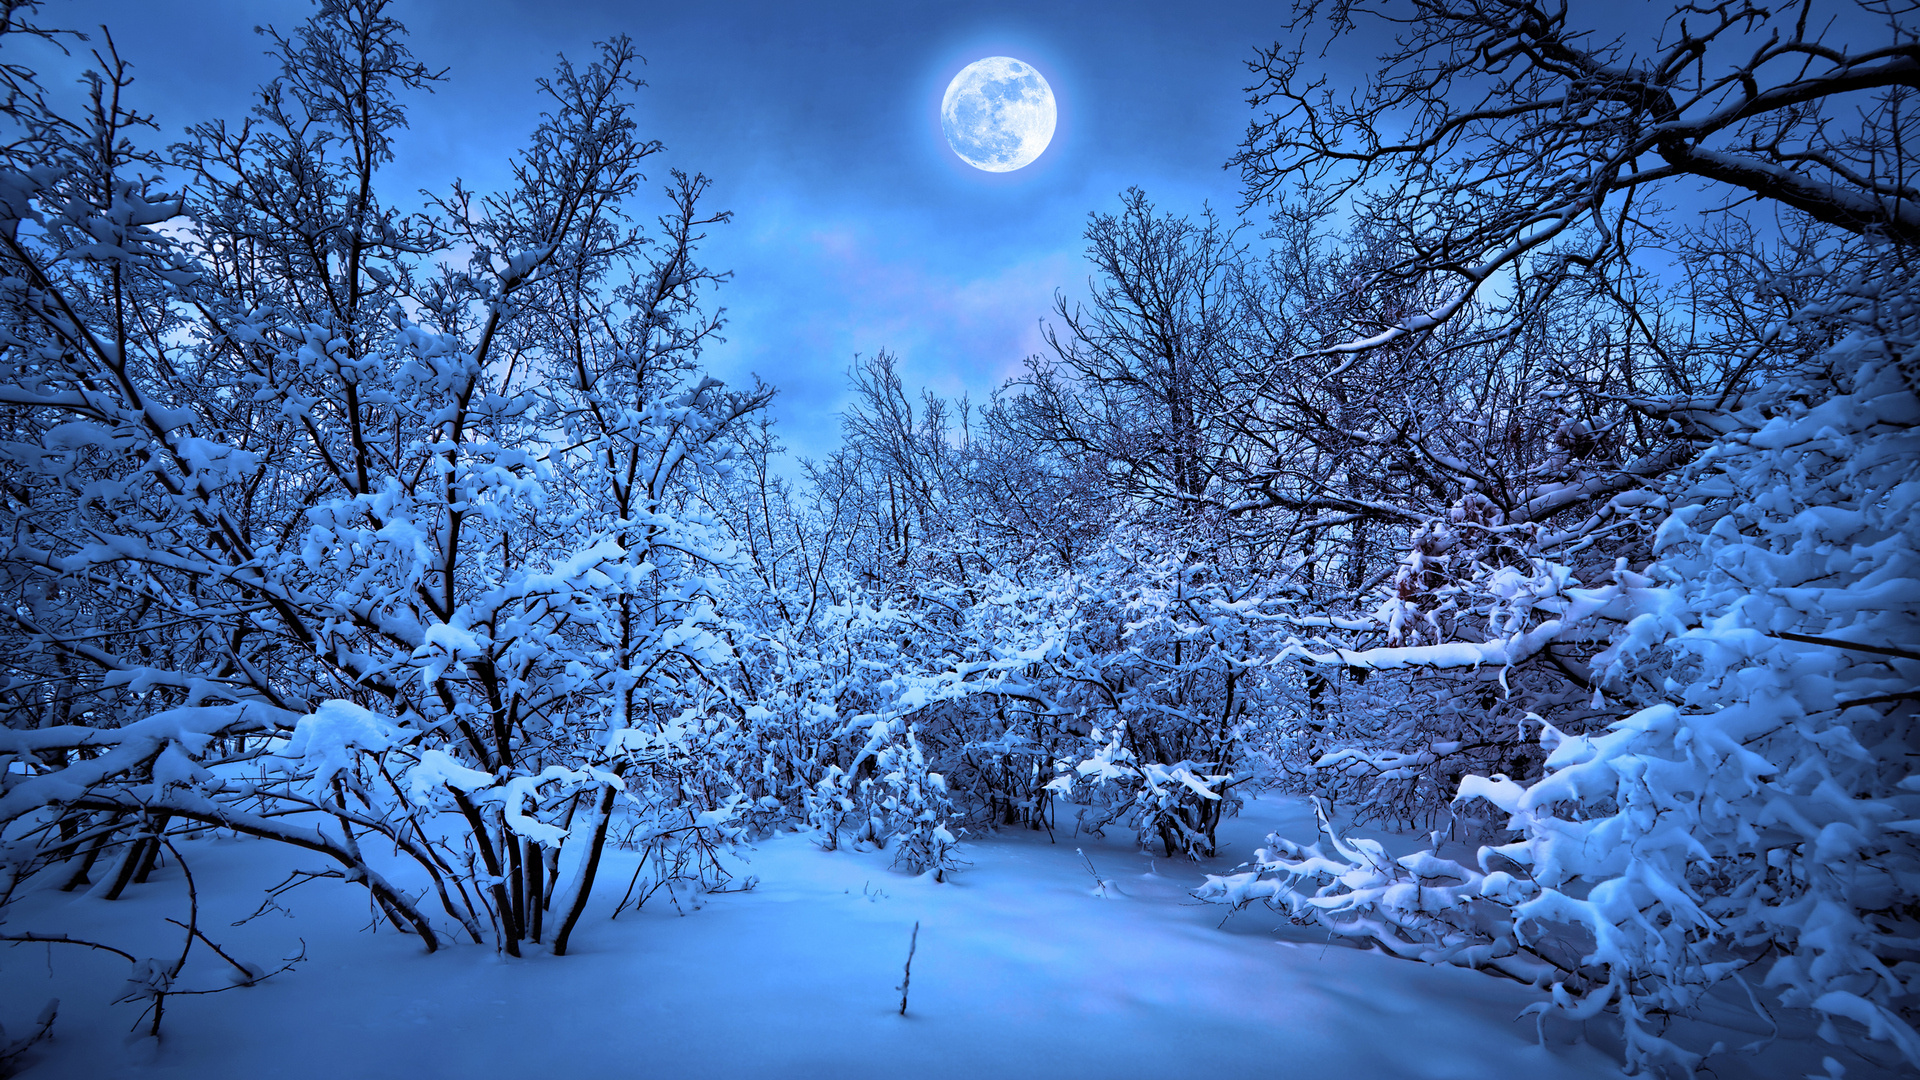 Forest moon night snow winter f wallpaper 1920x1080 182148